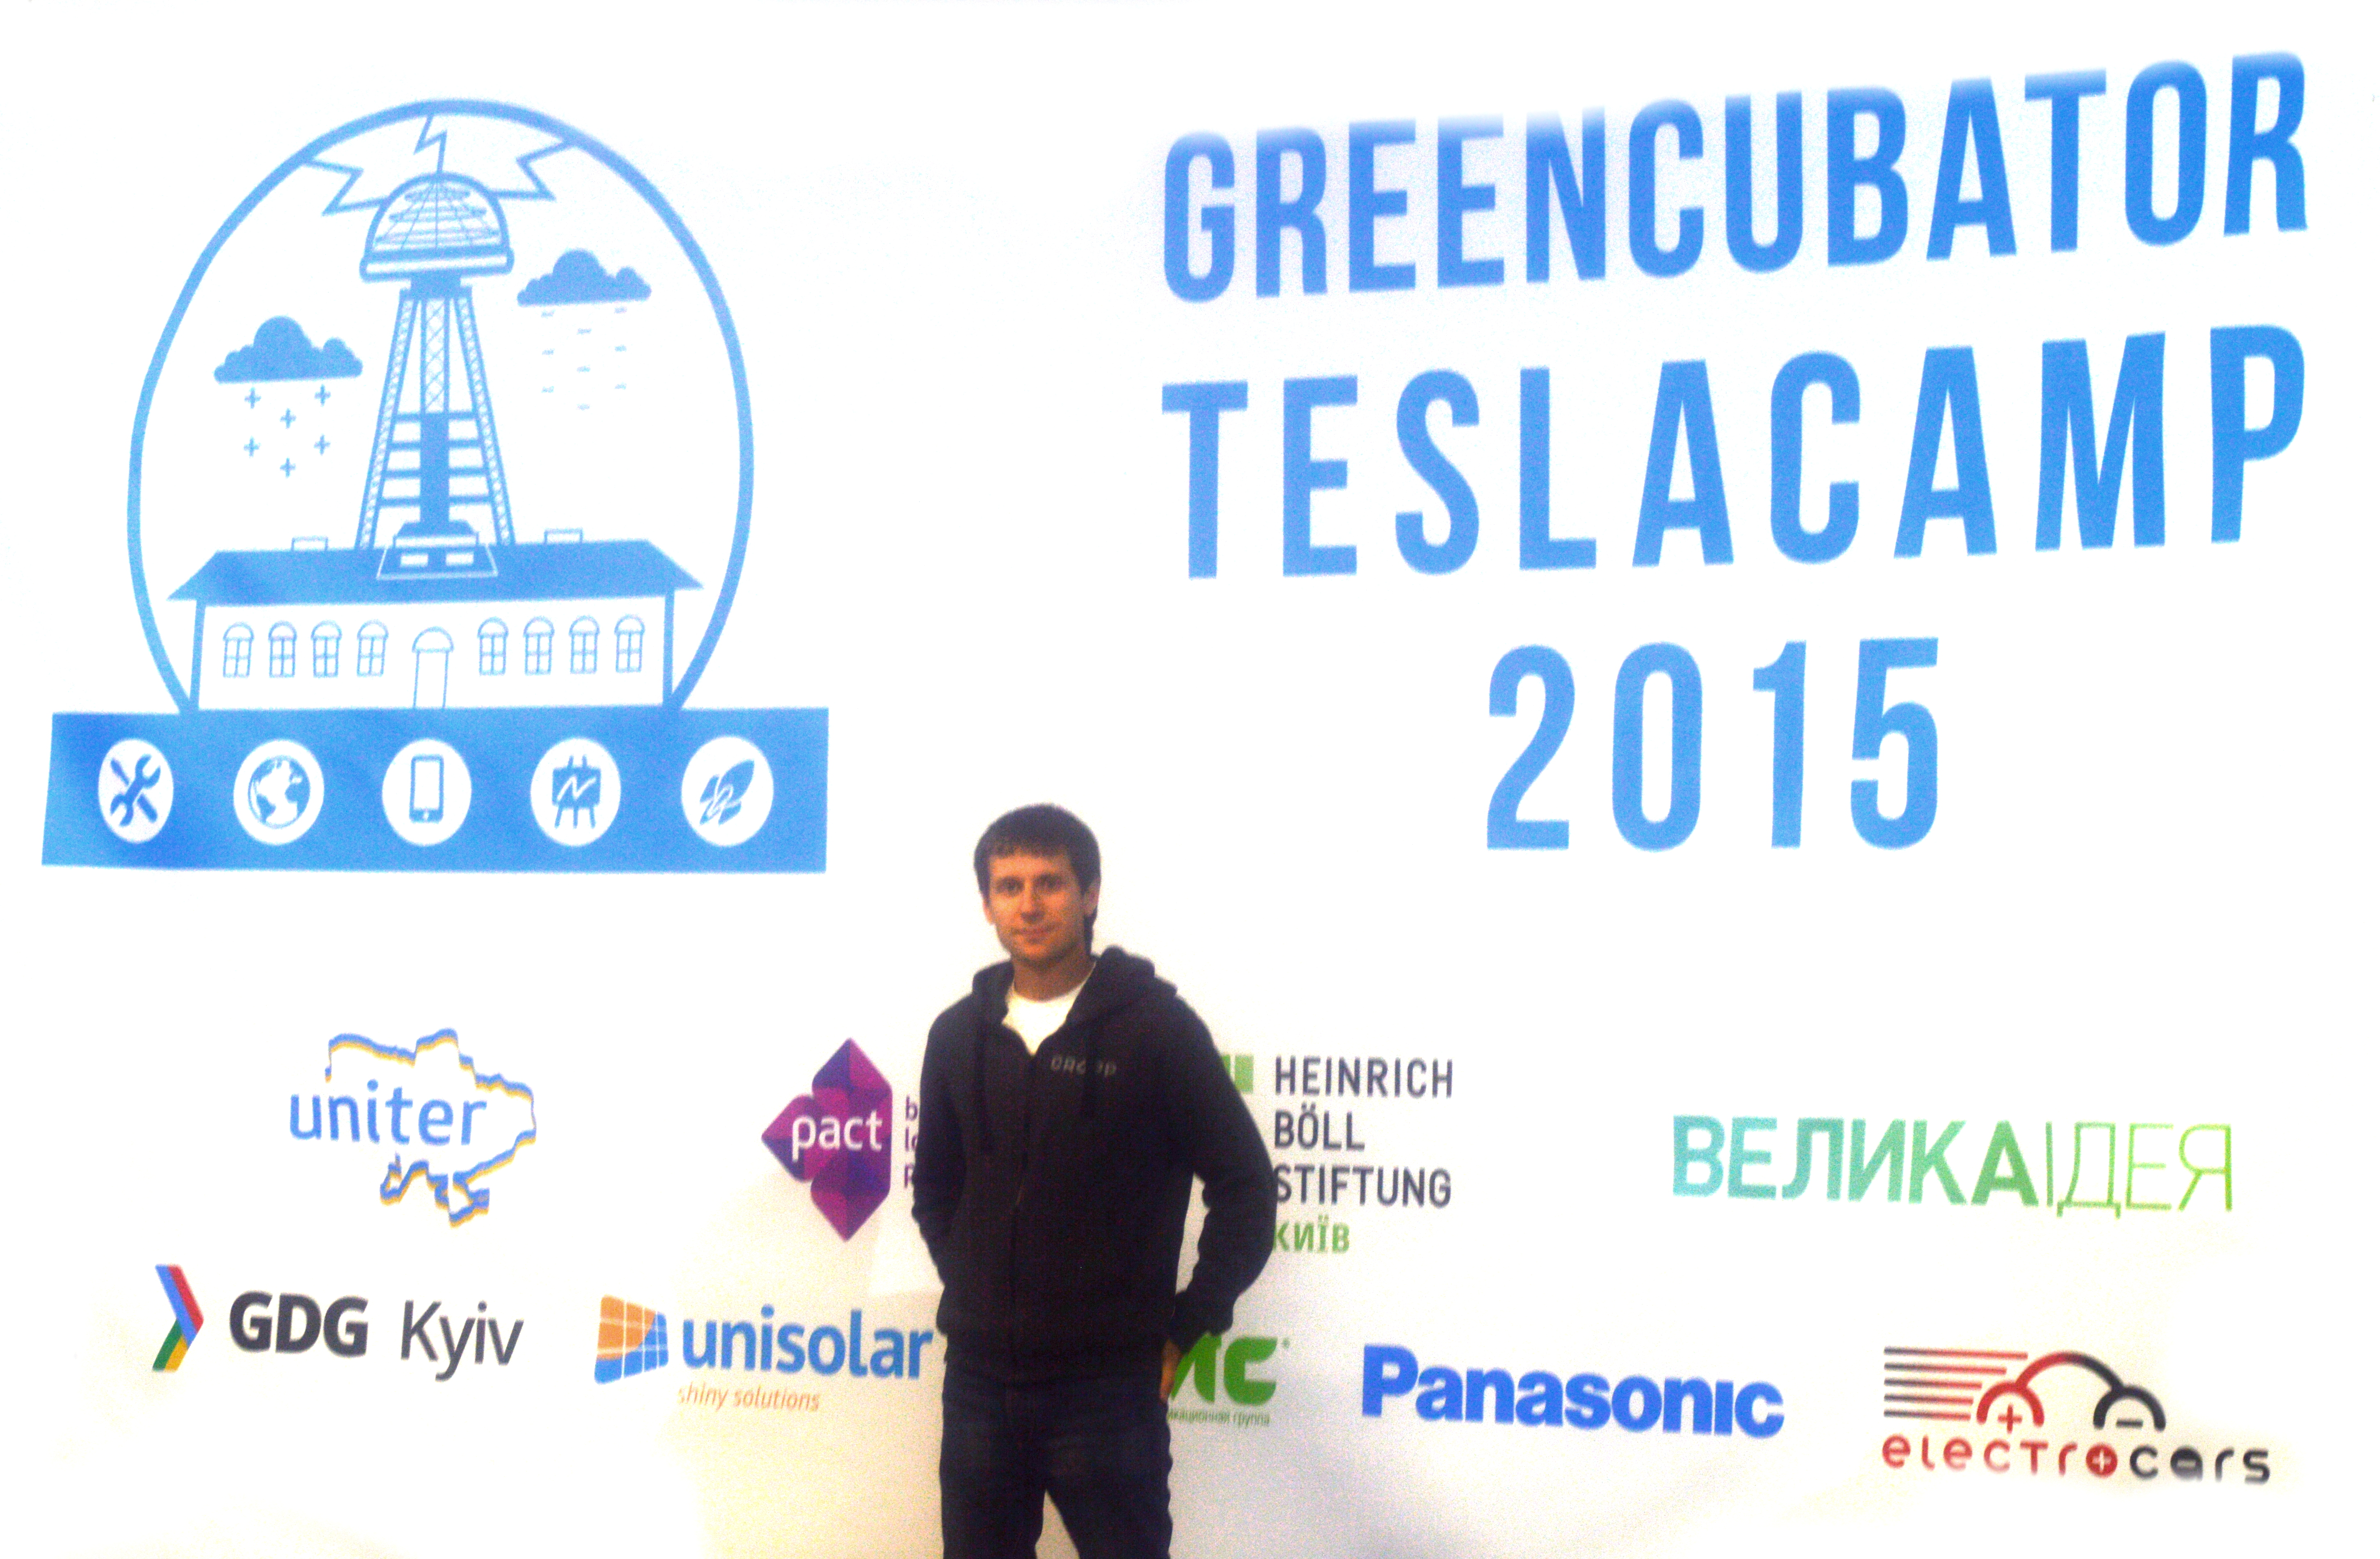 ecoist on Greencubator Teslacamp